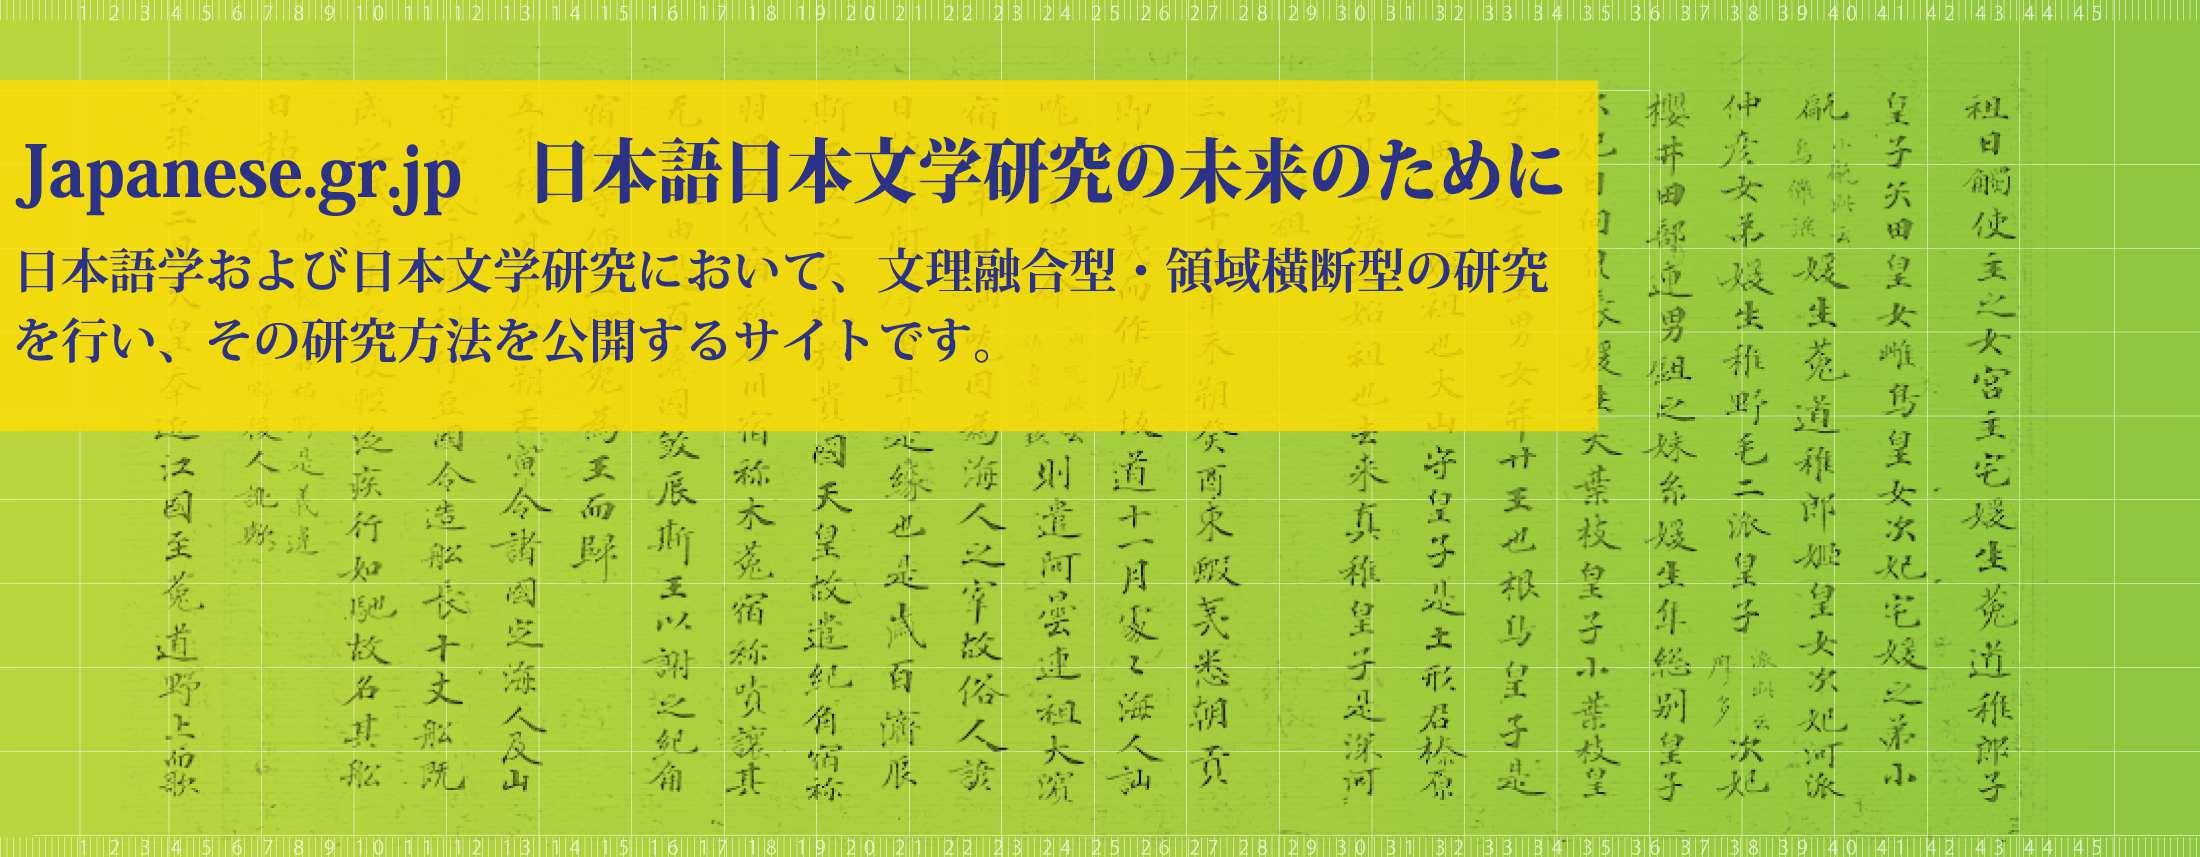 Japanese.gr.jp 日本語学および日本文学研究において、文理融合型・領域横断型の研究